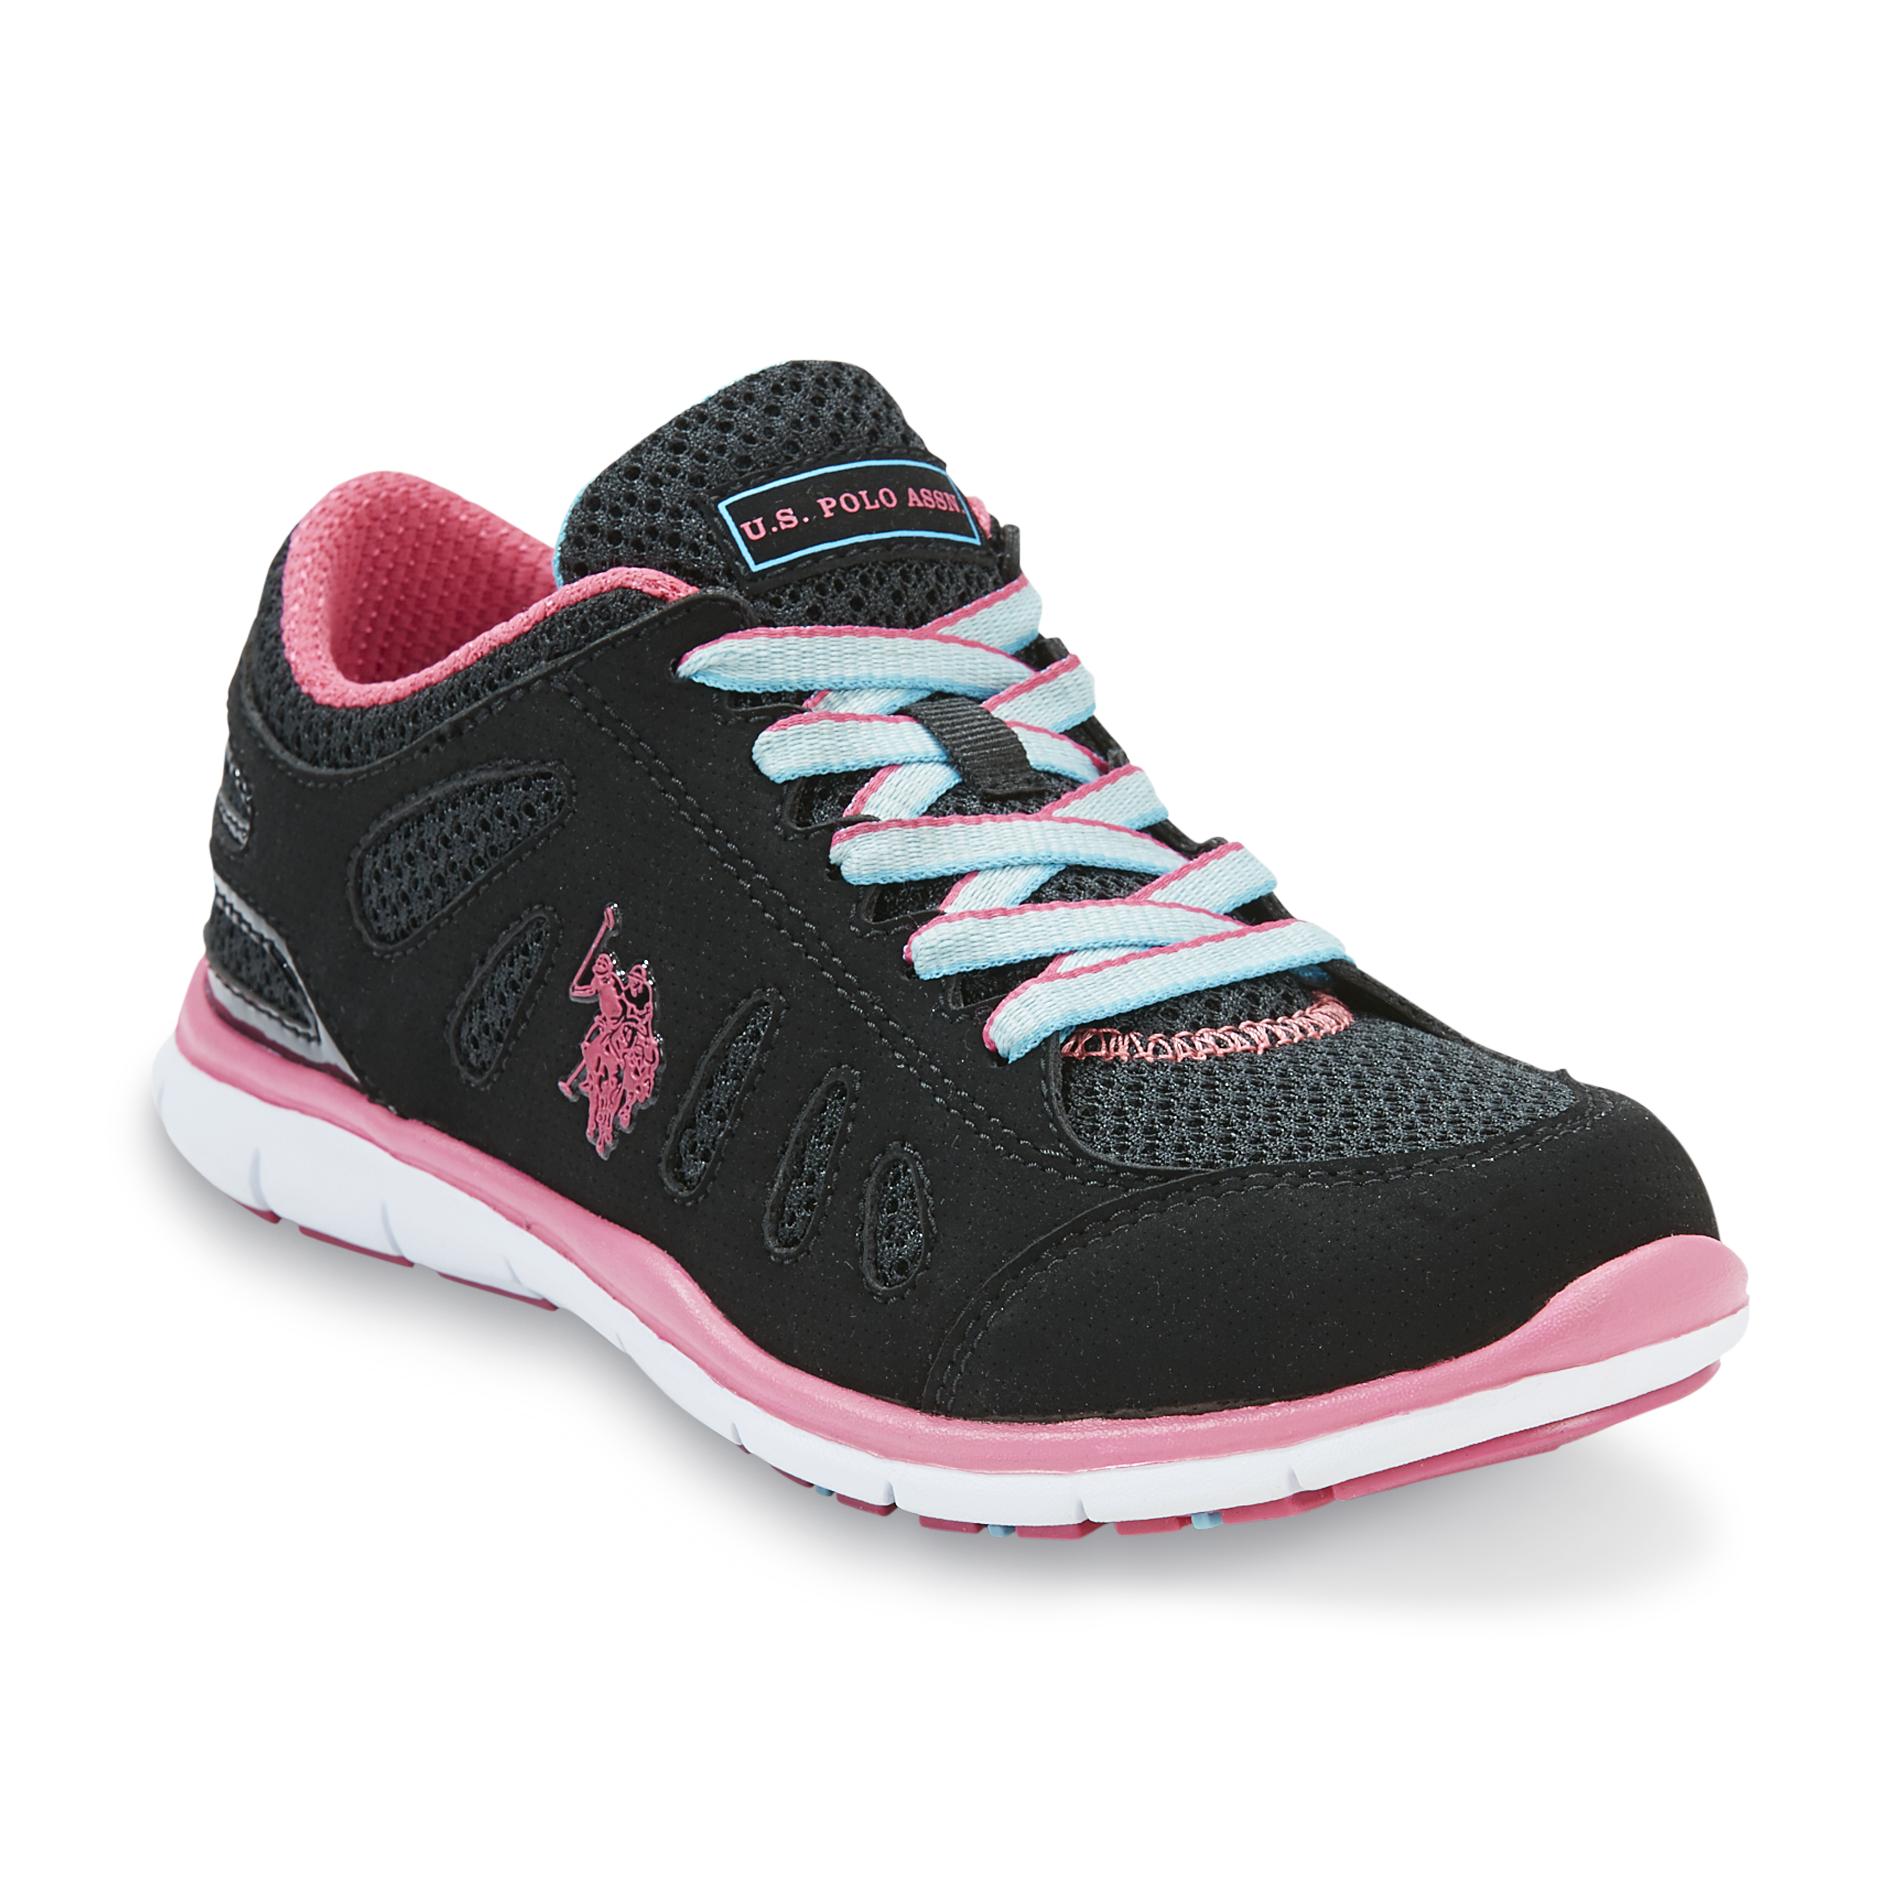 U.S. Polo Assn. Women's Nova Black/Pink/Blue Athletic Shoe